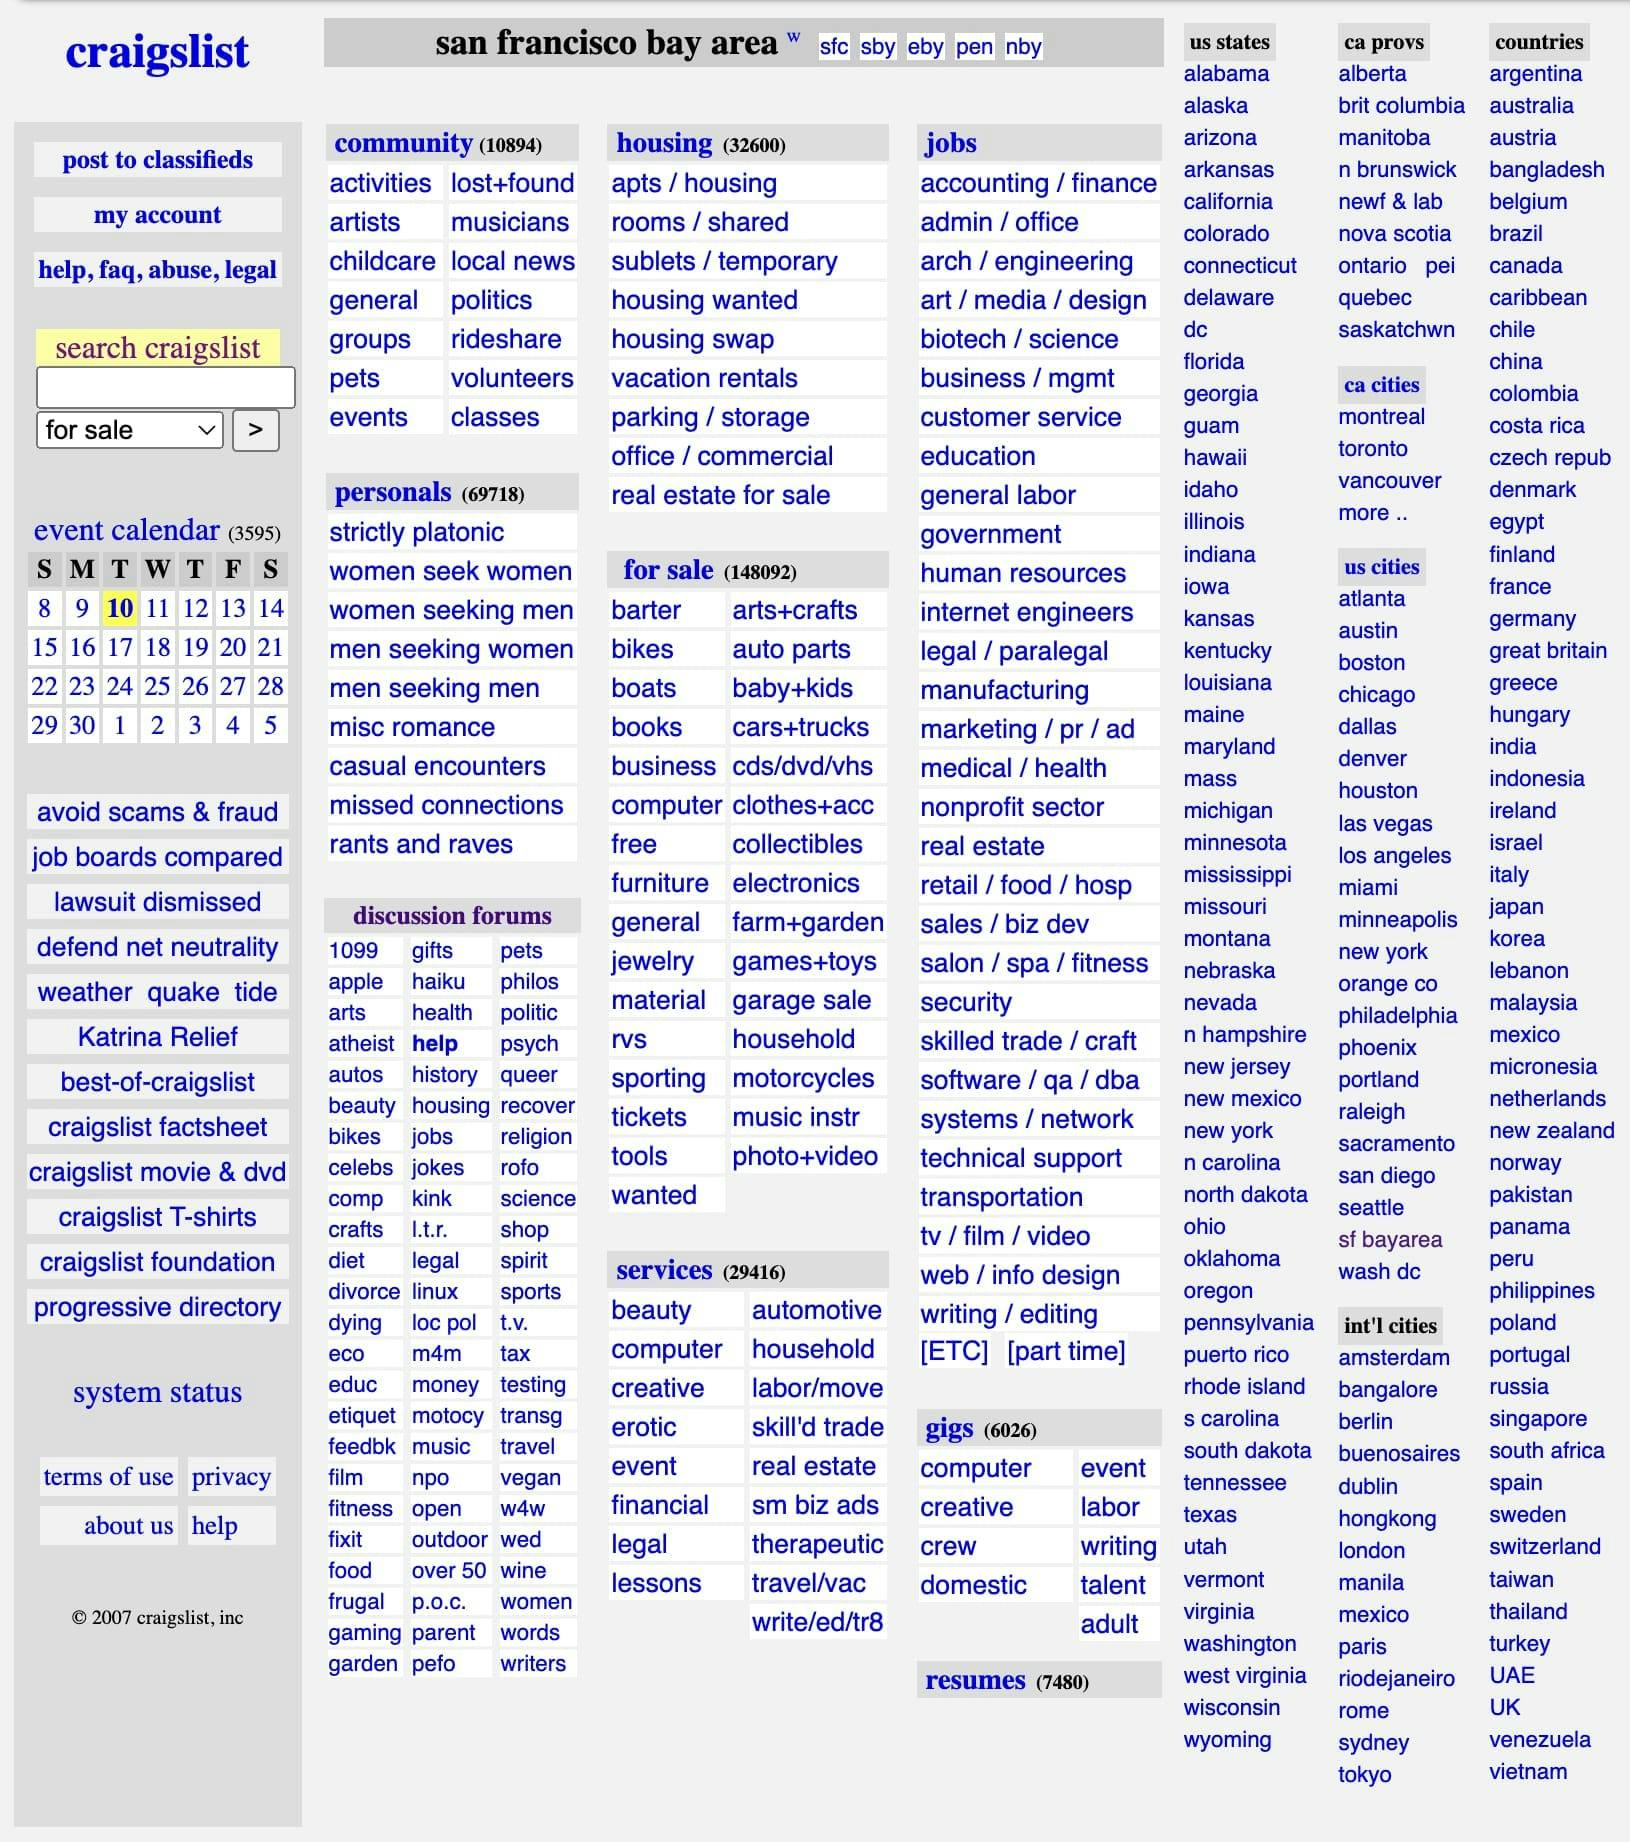 Screenshot 2007-04-11